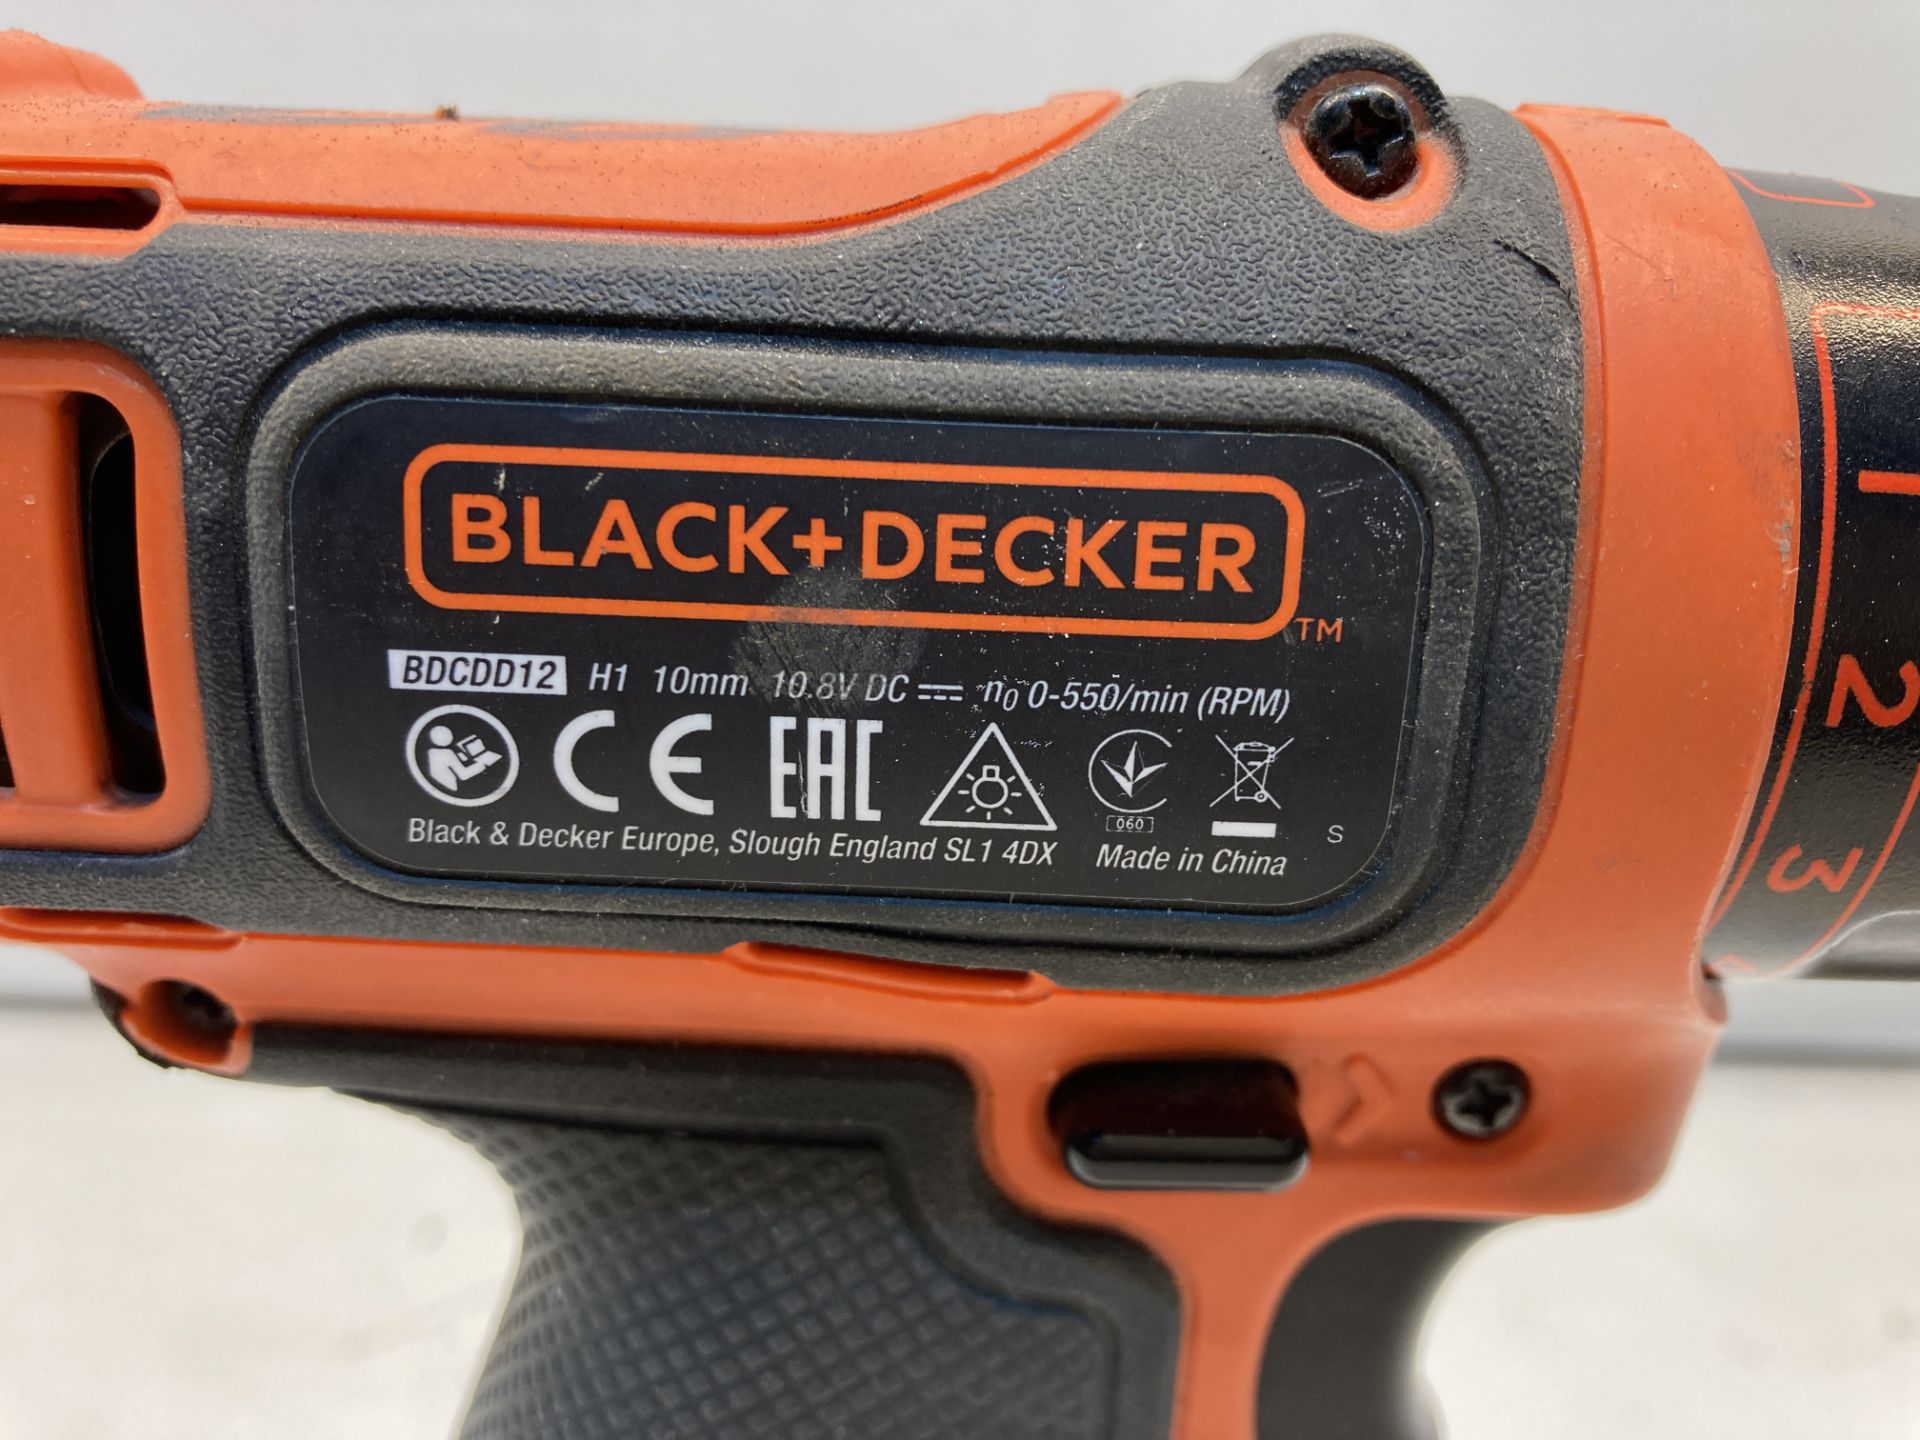 Black & Decker BDCDD12 Cordless Drill w/ Battery - Image 2 of 4